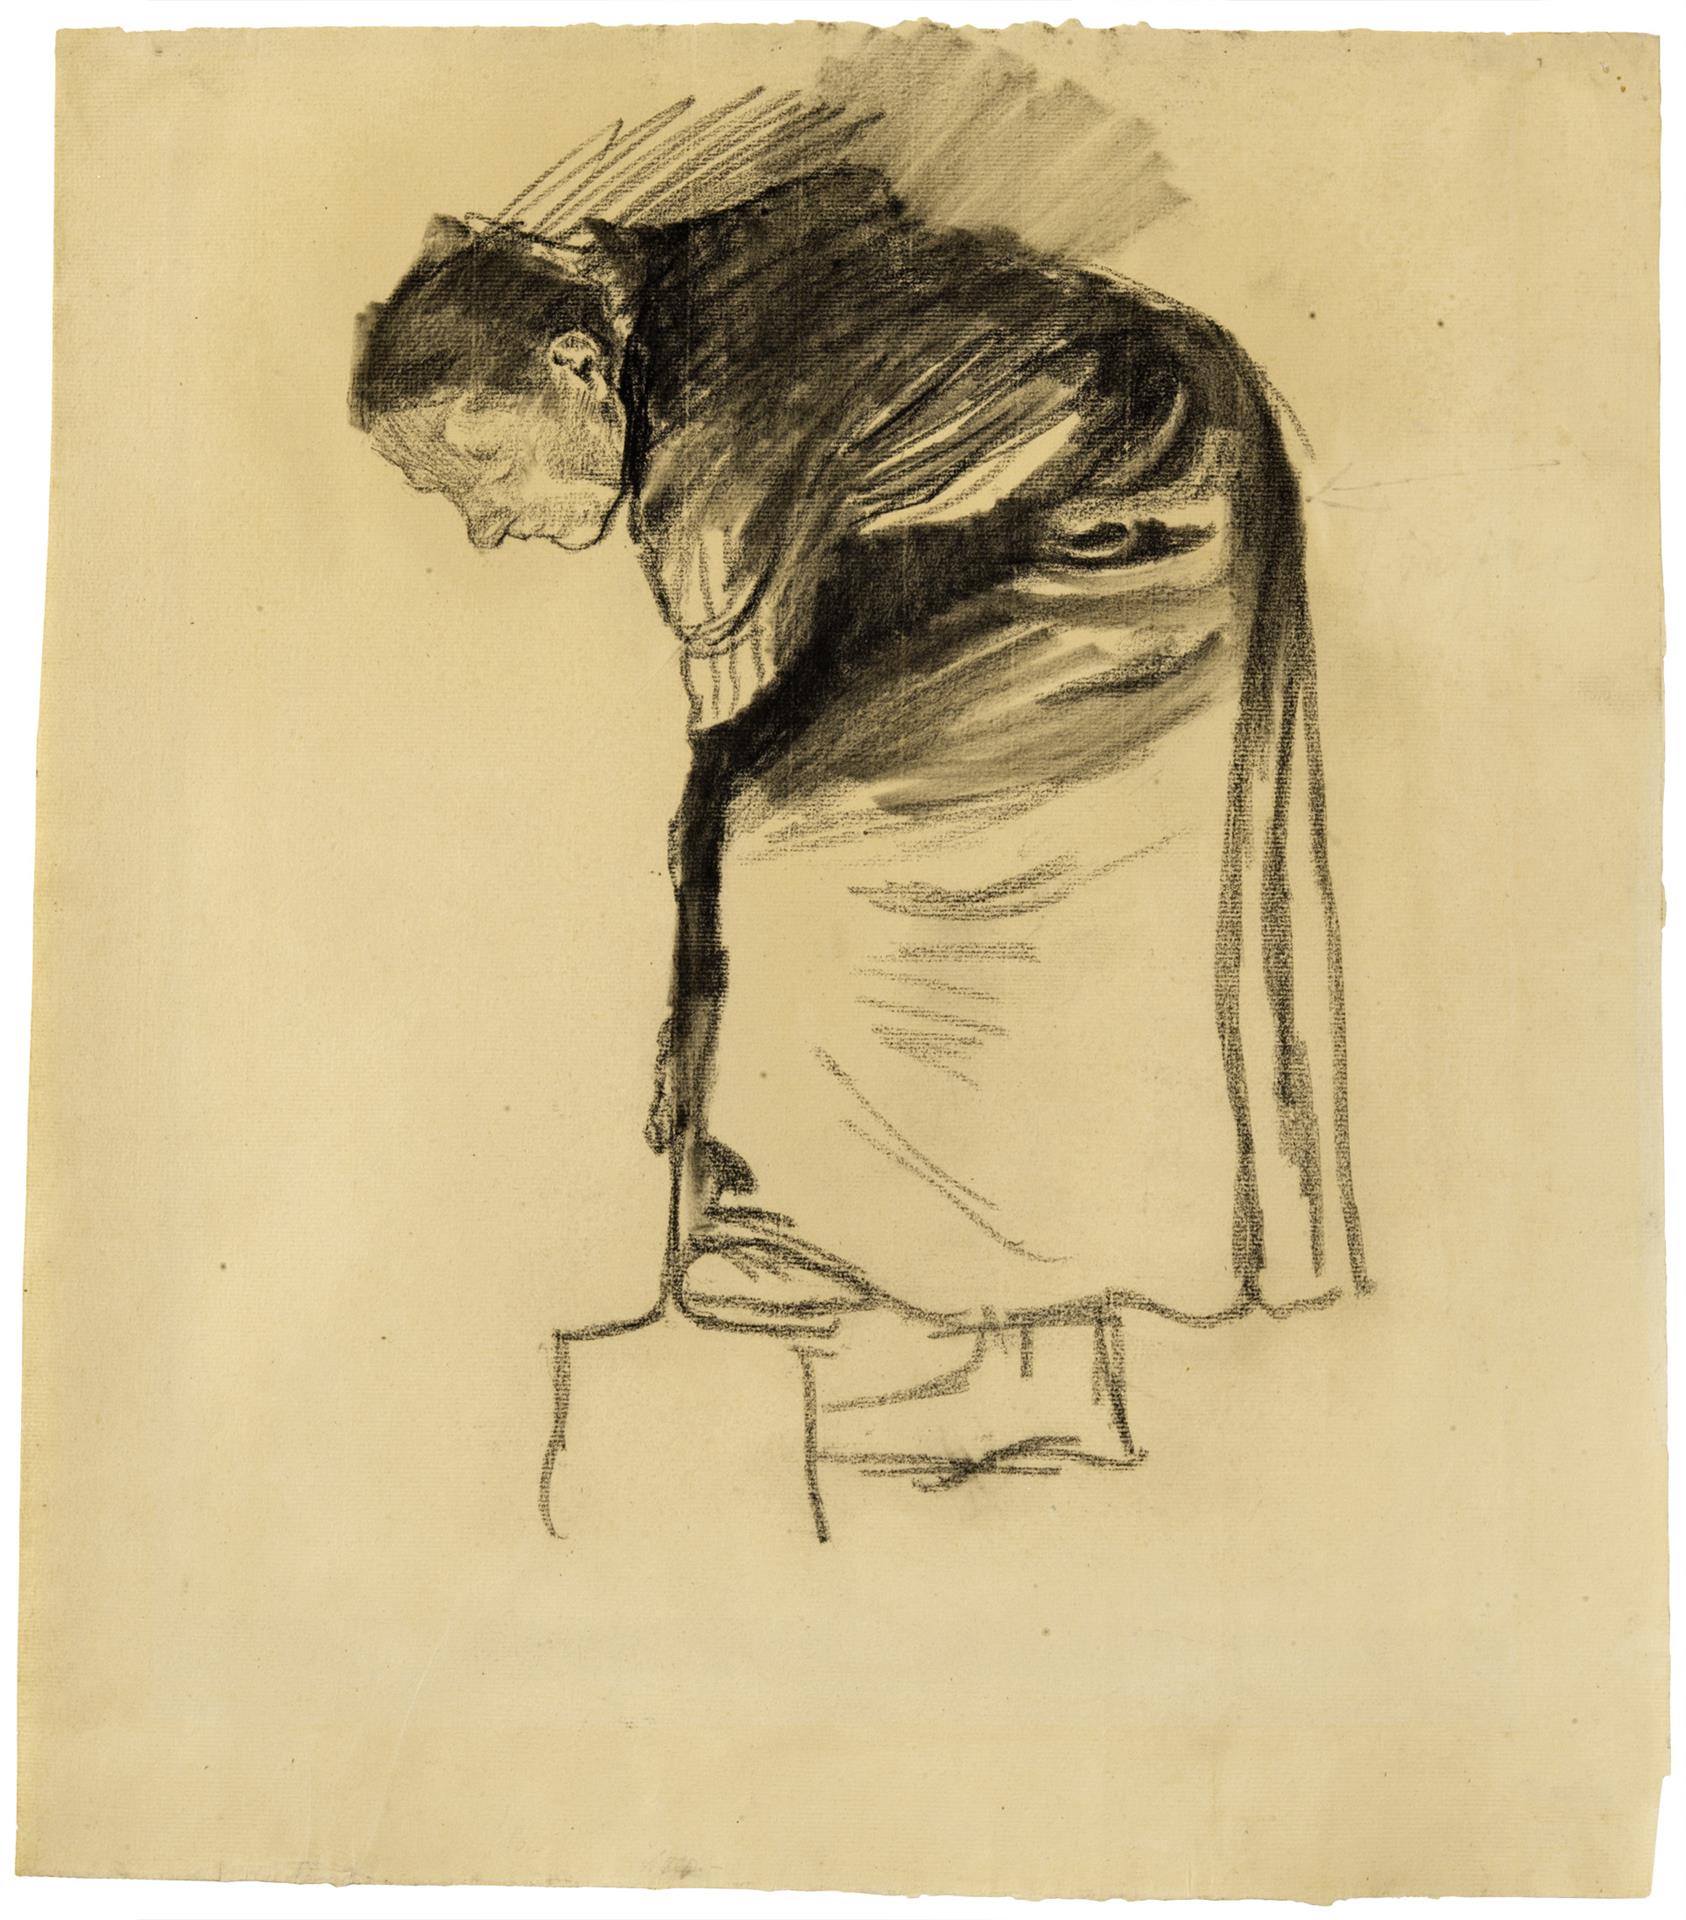 Käthe Kollwitz, Femme creusant, 1903, fusain sur papier Ingres, NT 254, Collection Kollwitz de Cologne © Käthe Kollwitz Museum Köln